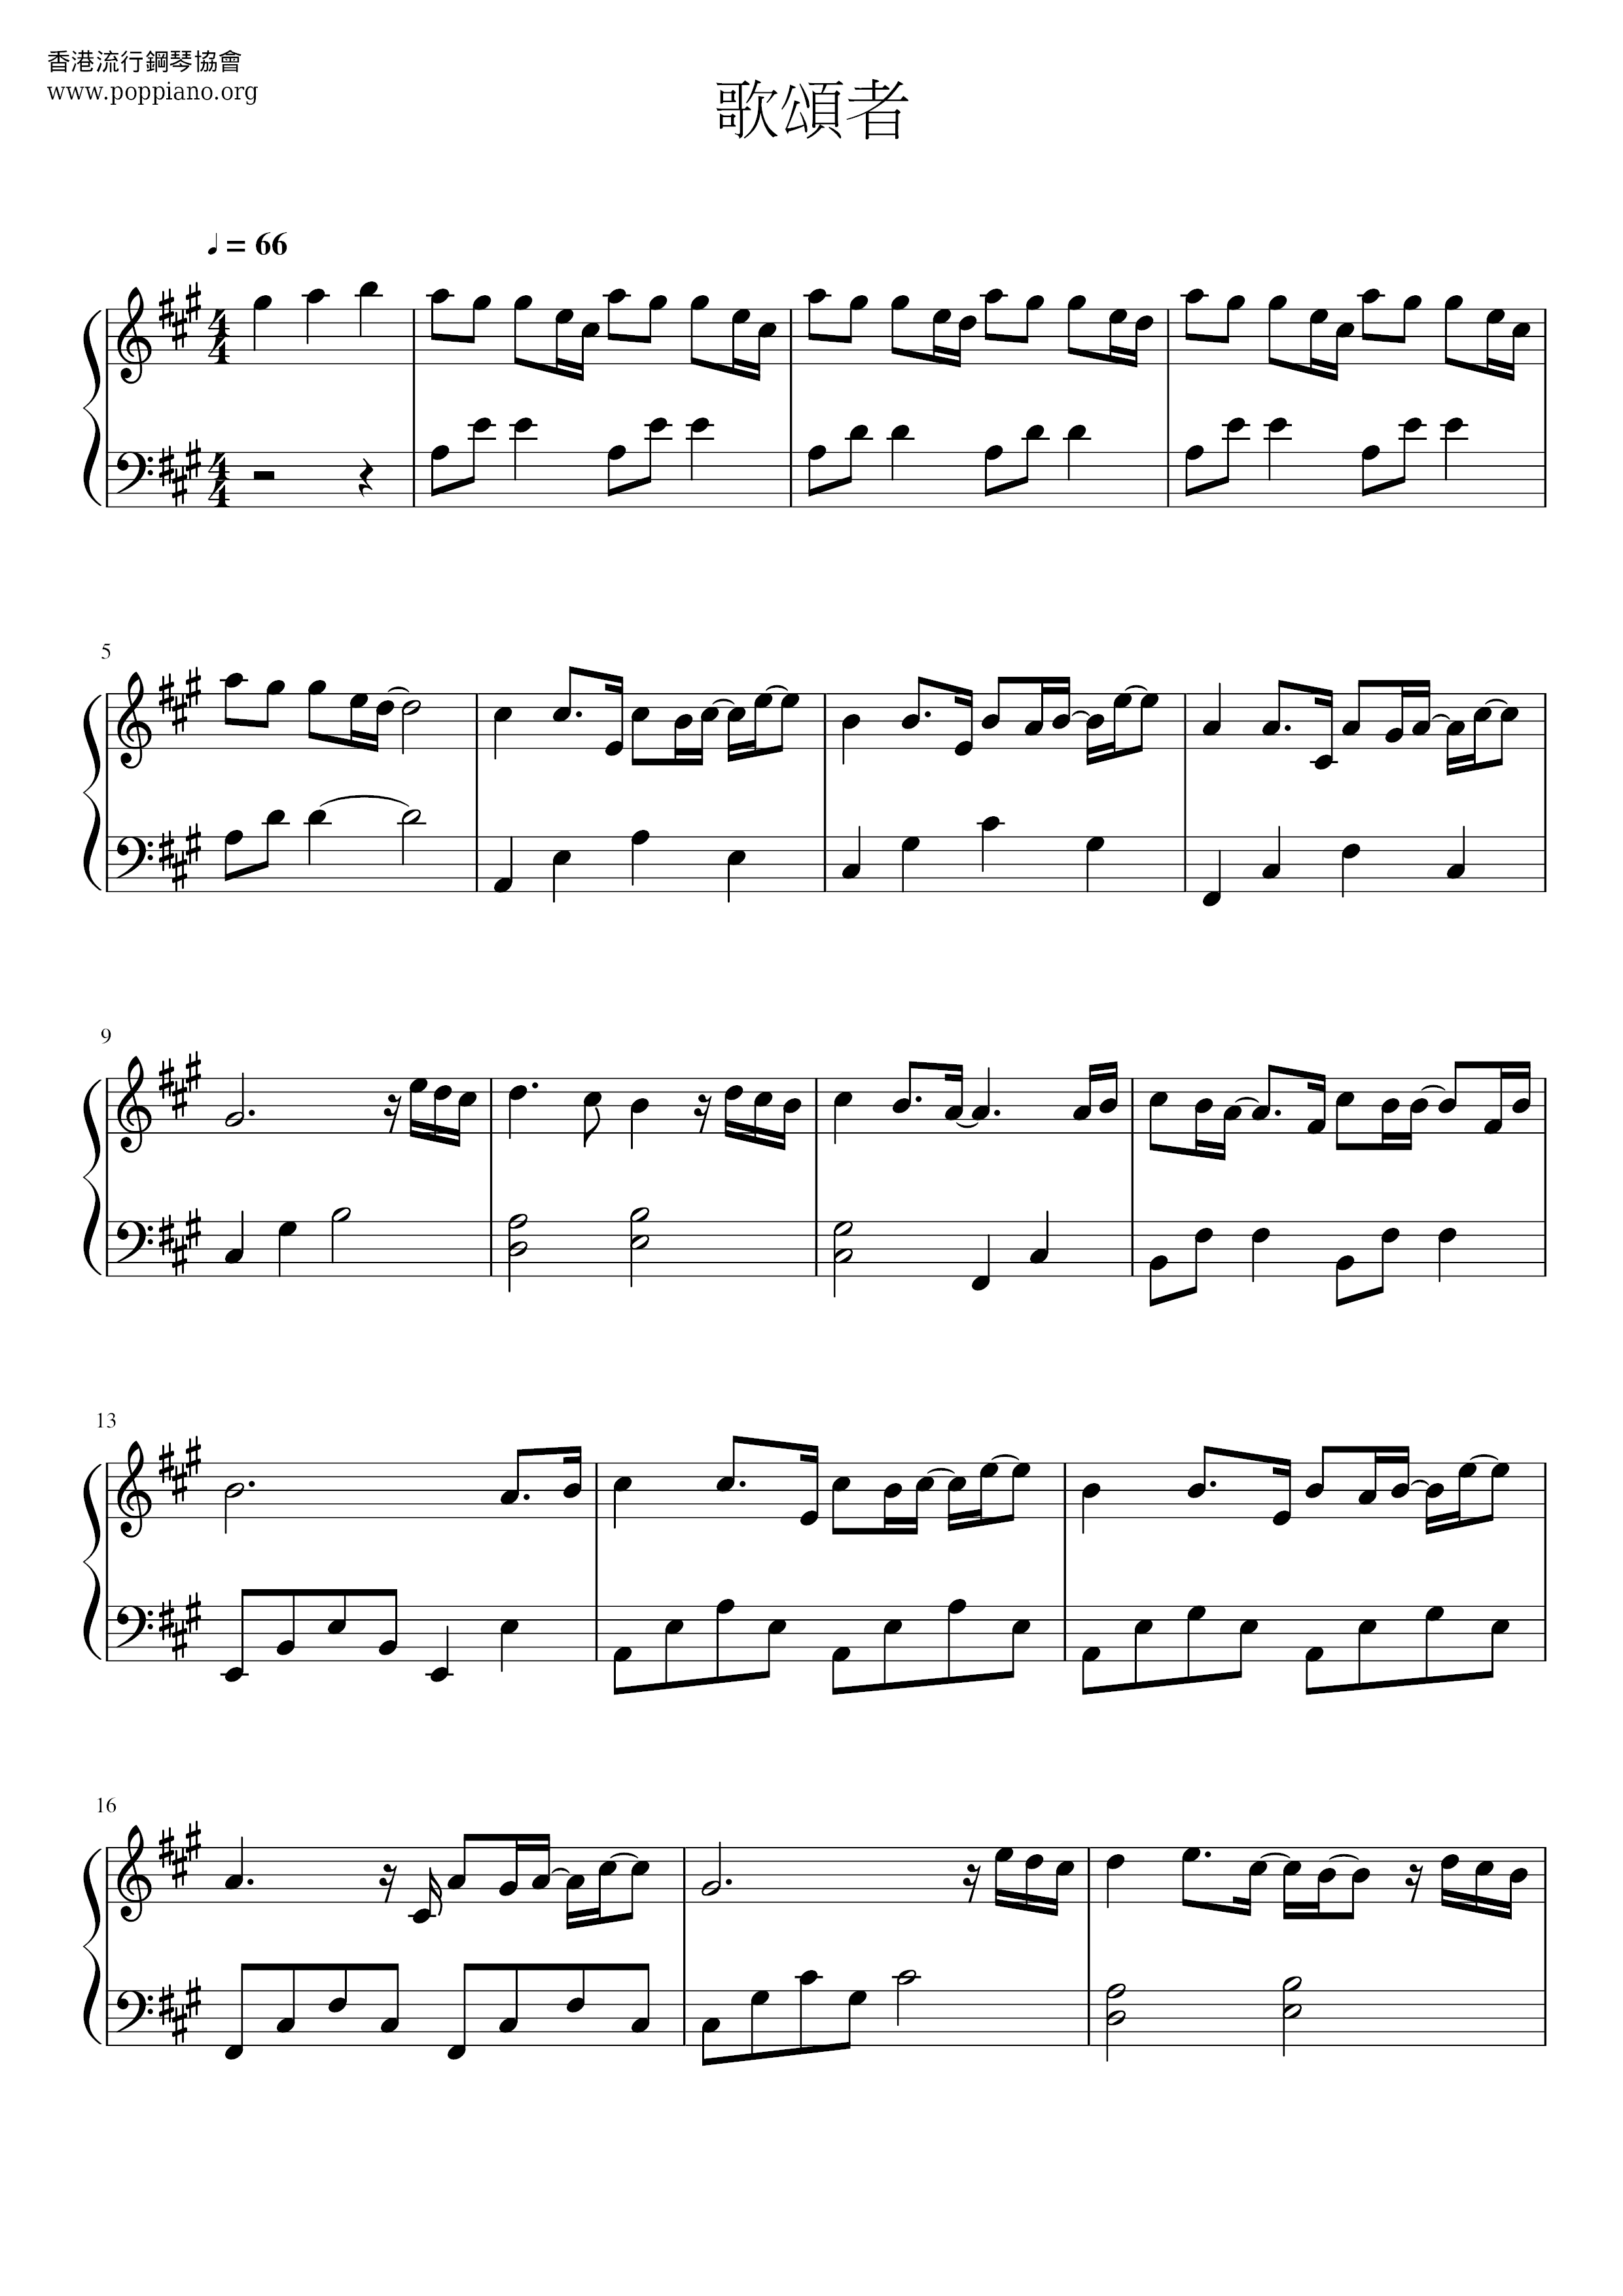 Chantler Score